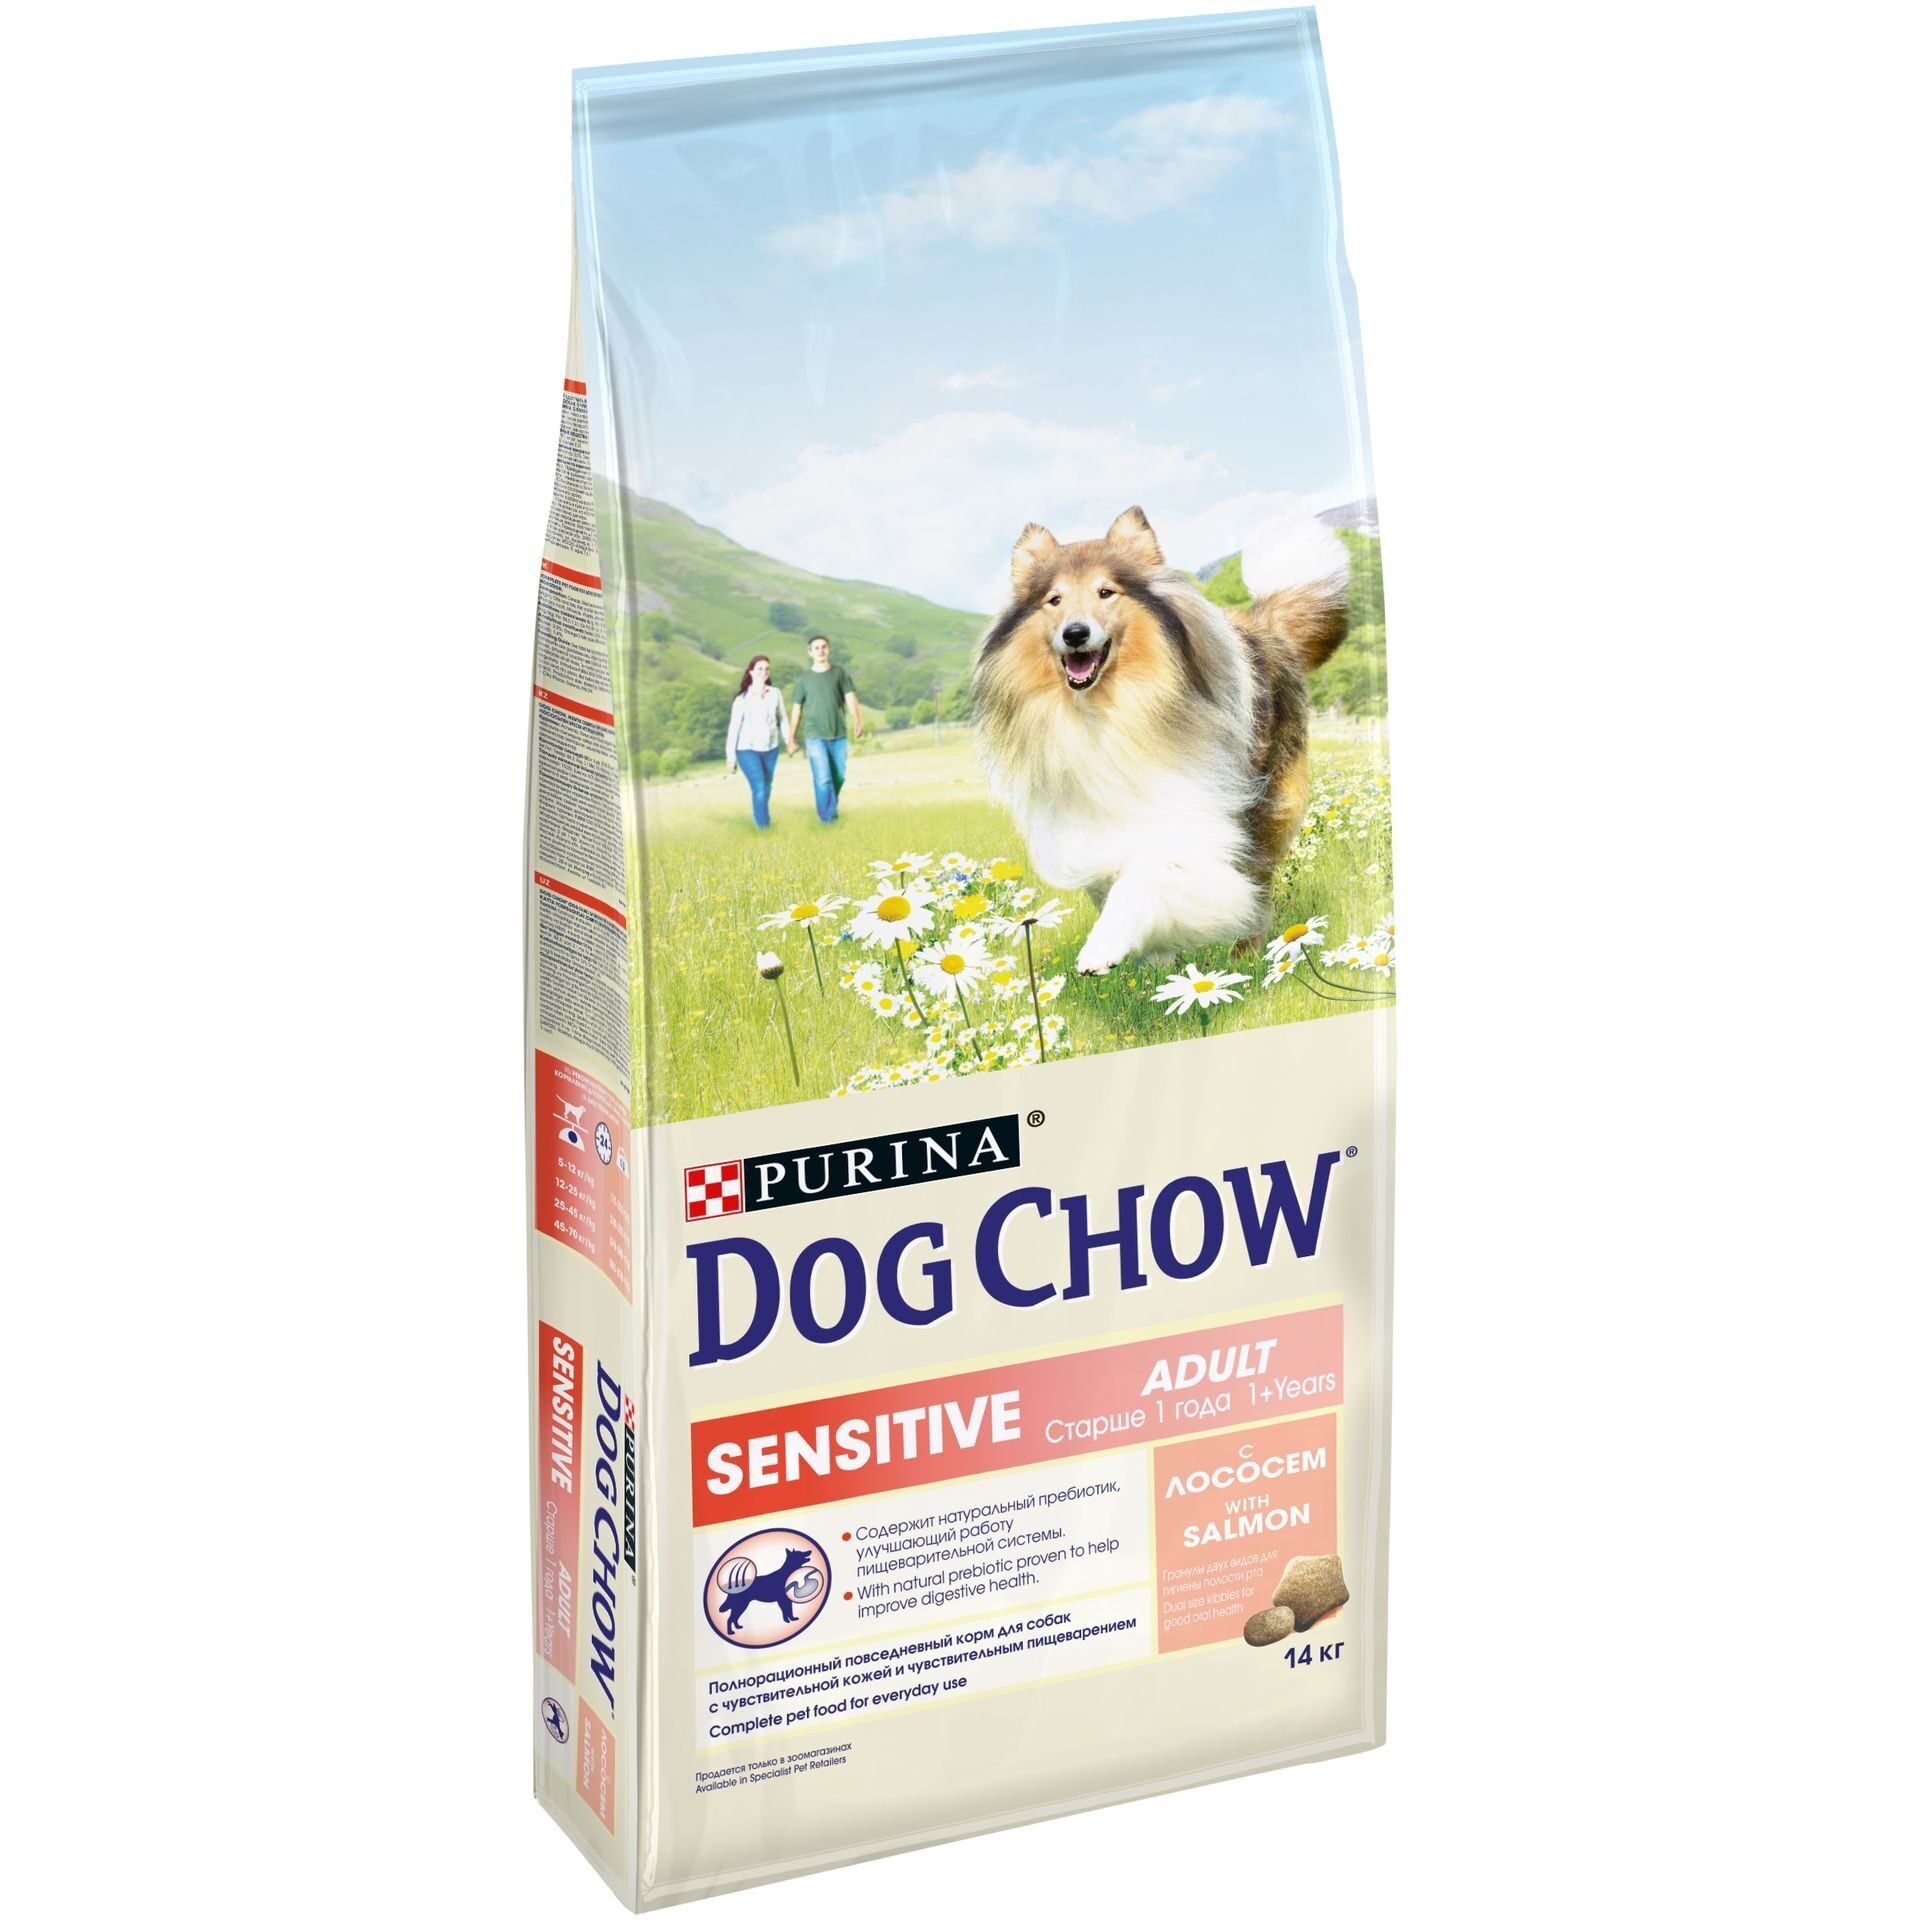 Купить корм для собаки 14 кг. Dog Chow корм для собак. Dog Chow sensitive лосось. Корм для собак с лососем. Дрим дог корм для собак.